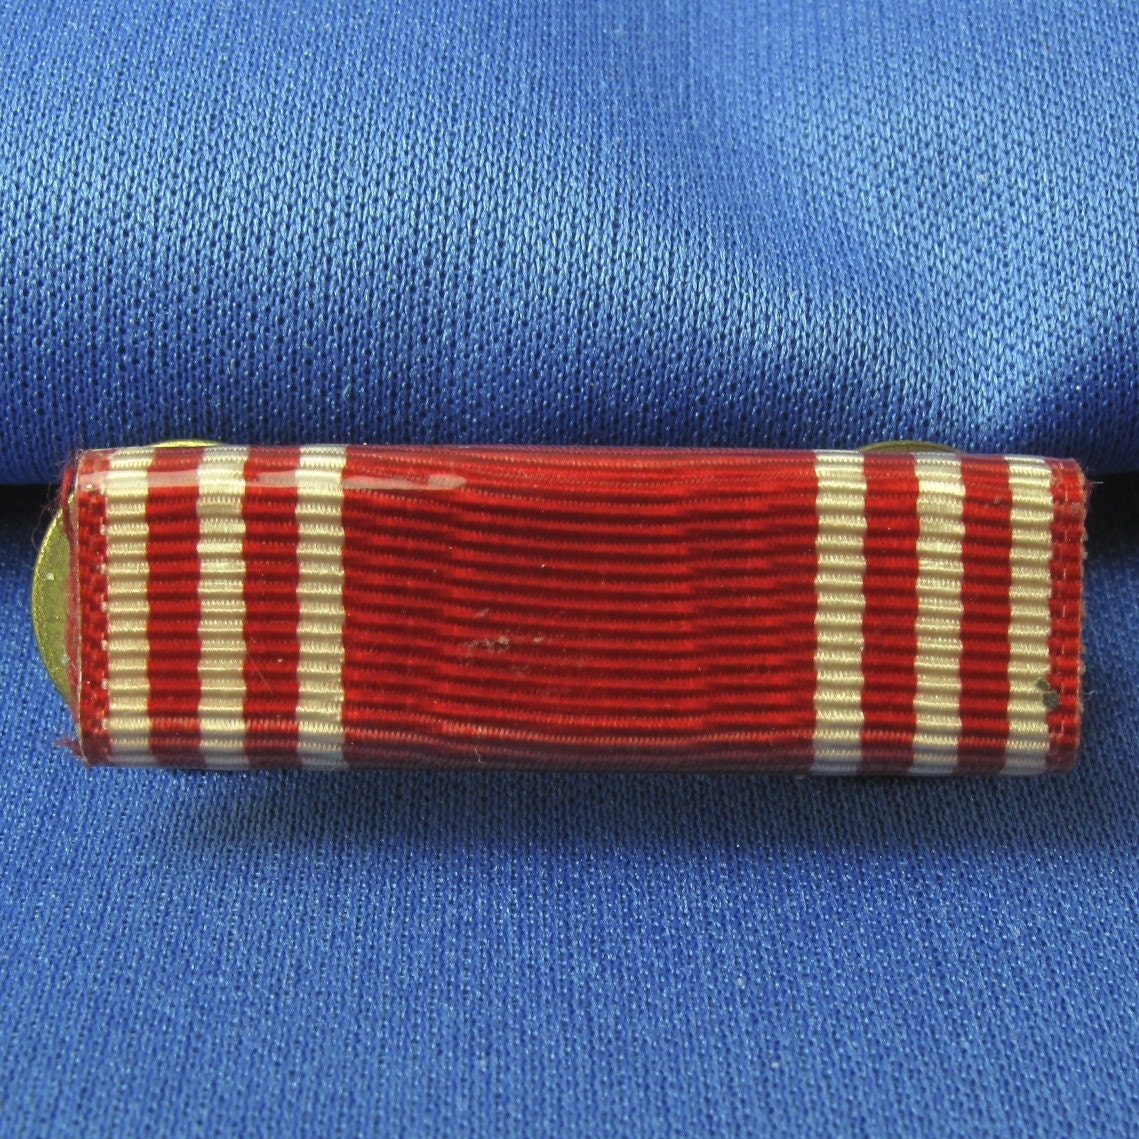 military WW2 SERVICE Ribbon Army Good Conduct Medal Uniform